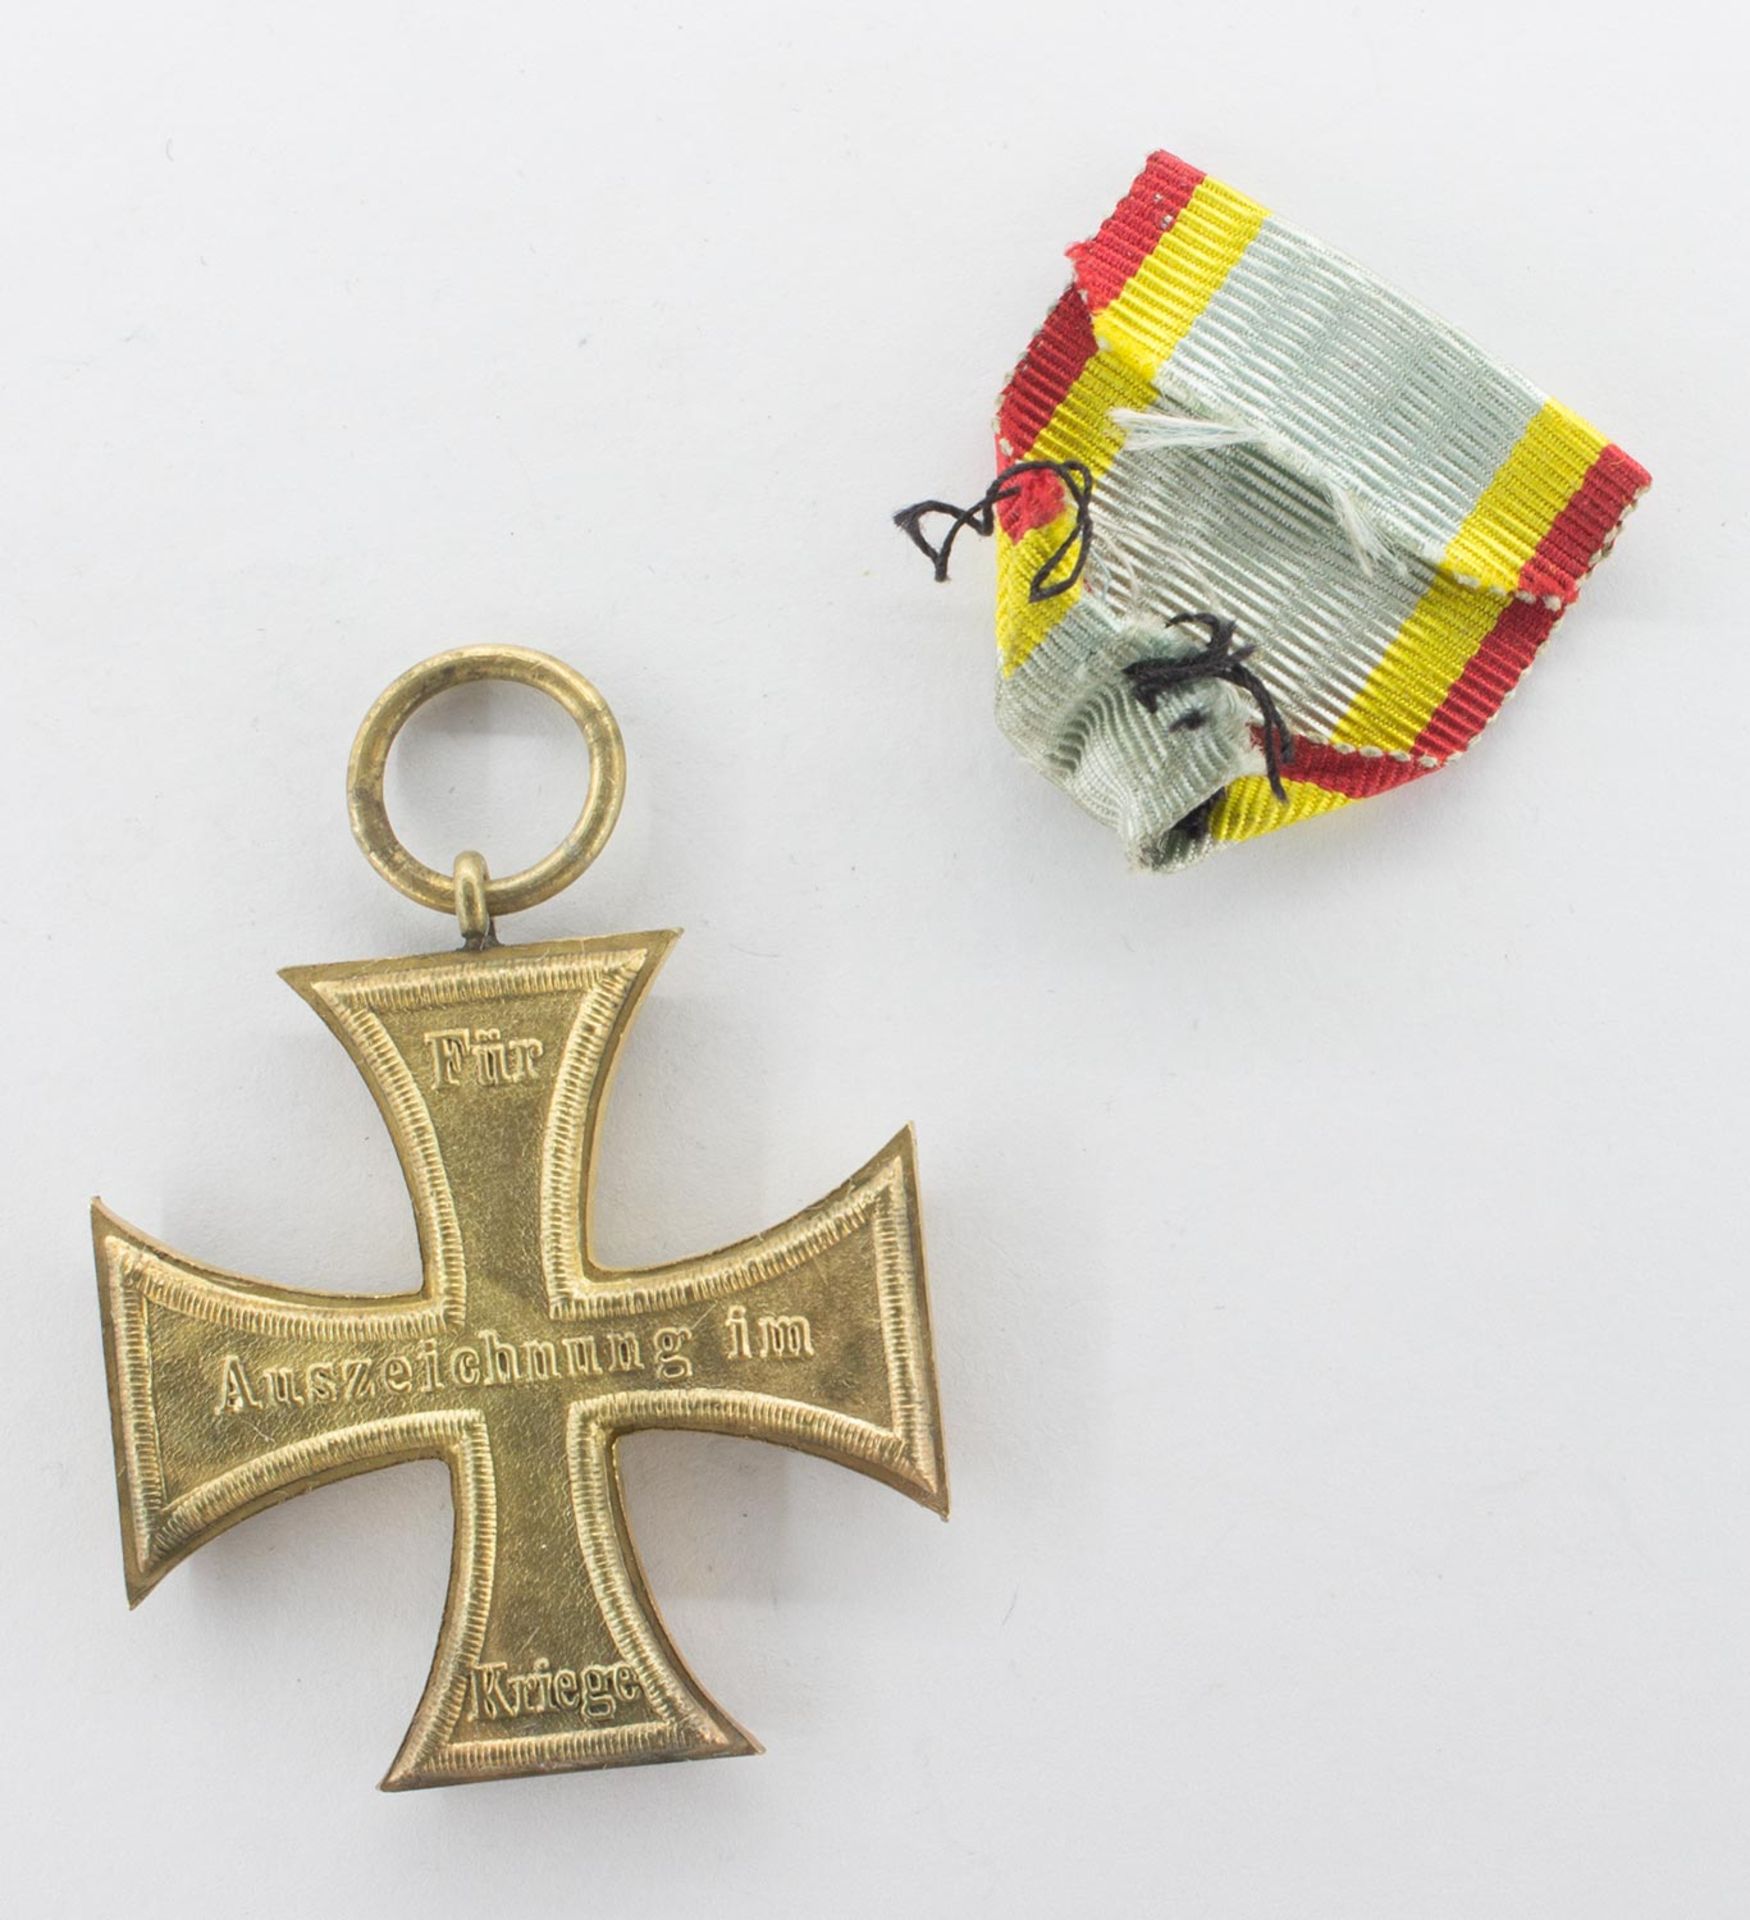 Militär Verdienstkreuz - Image 2 of 2